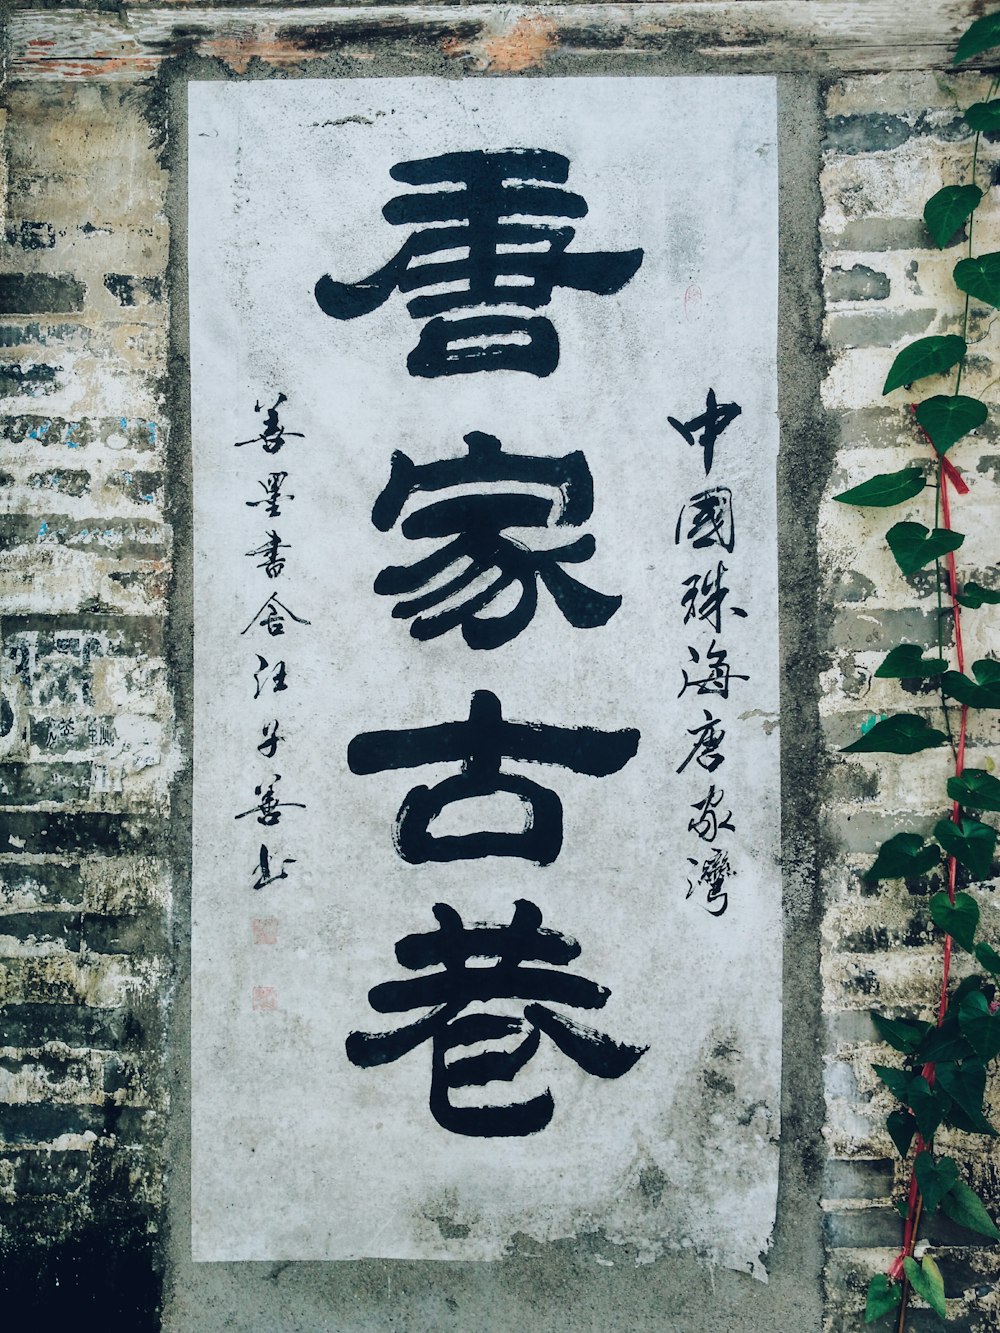 Mur de béton de texte kanji blanc et noir